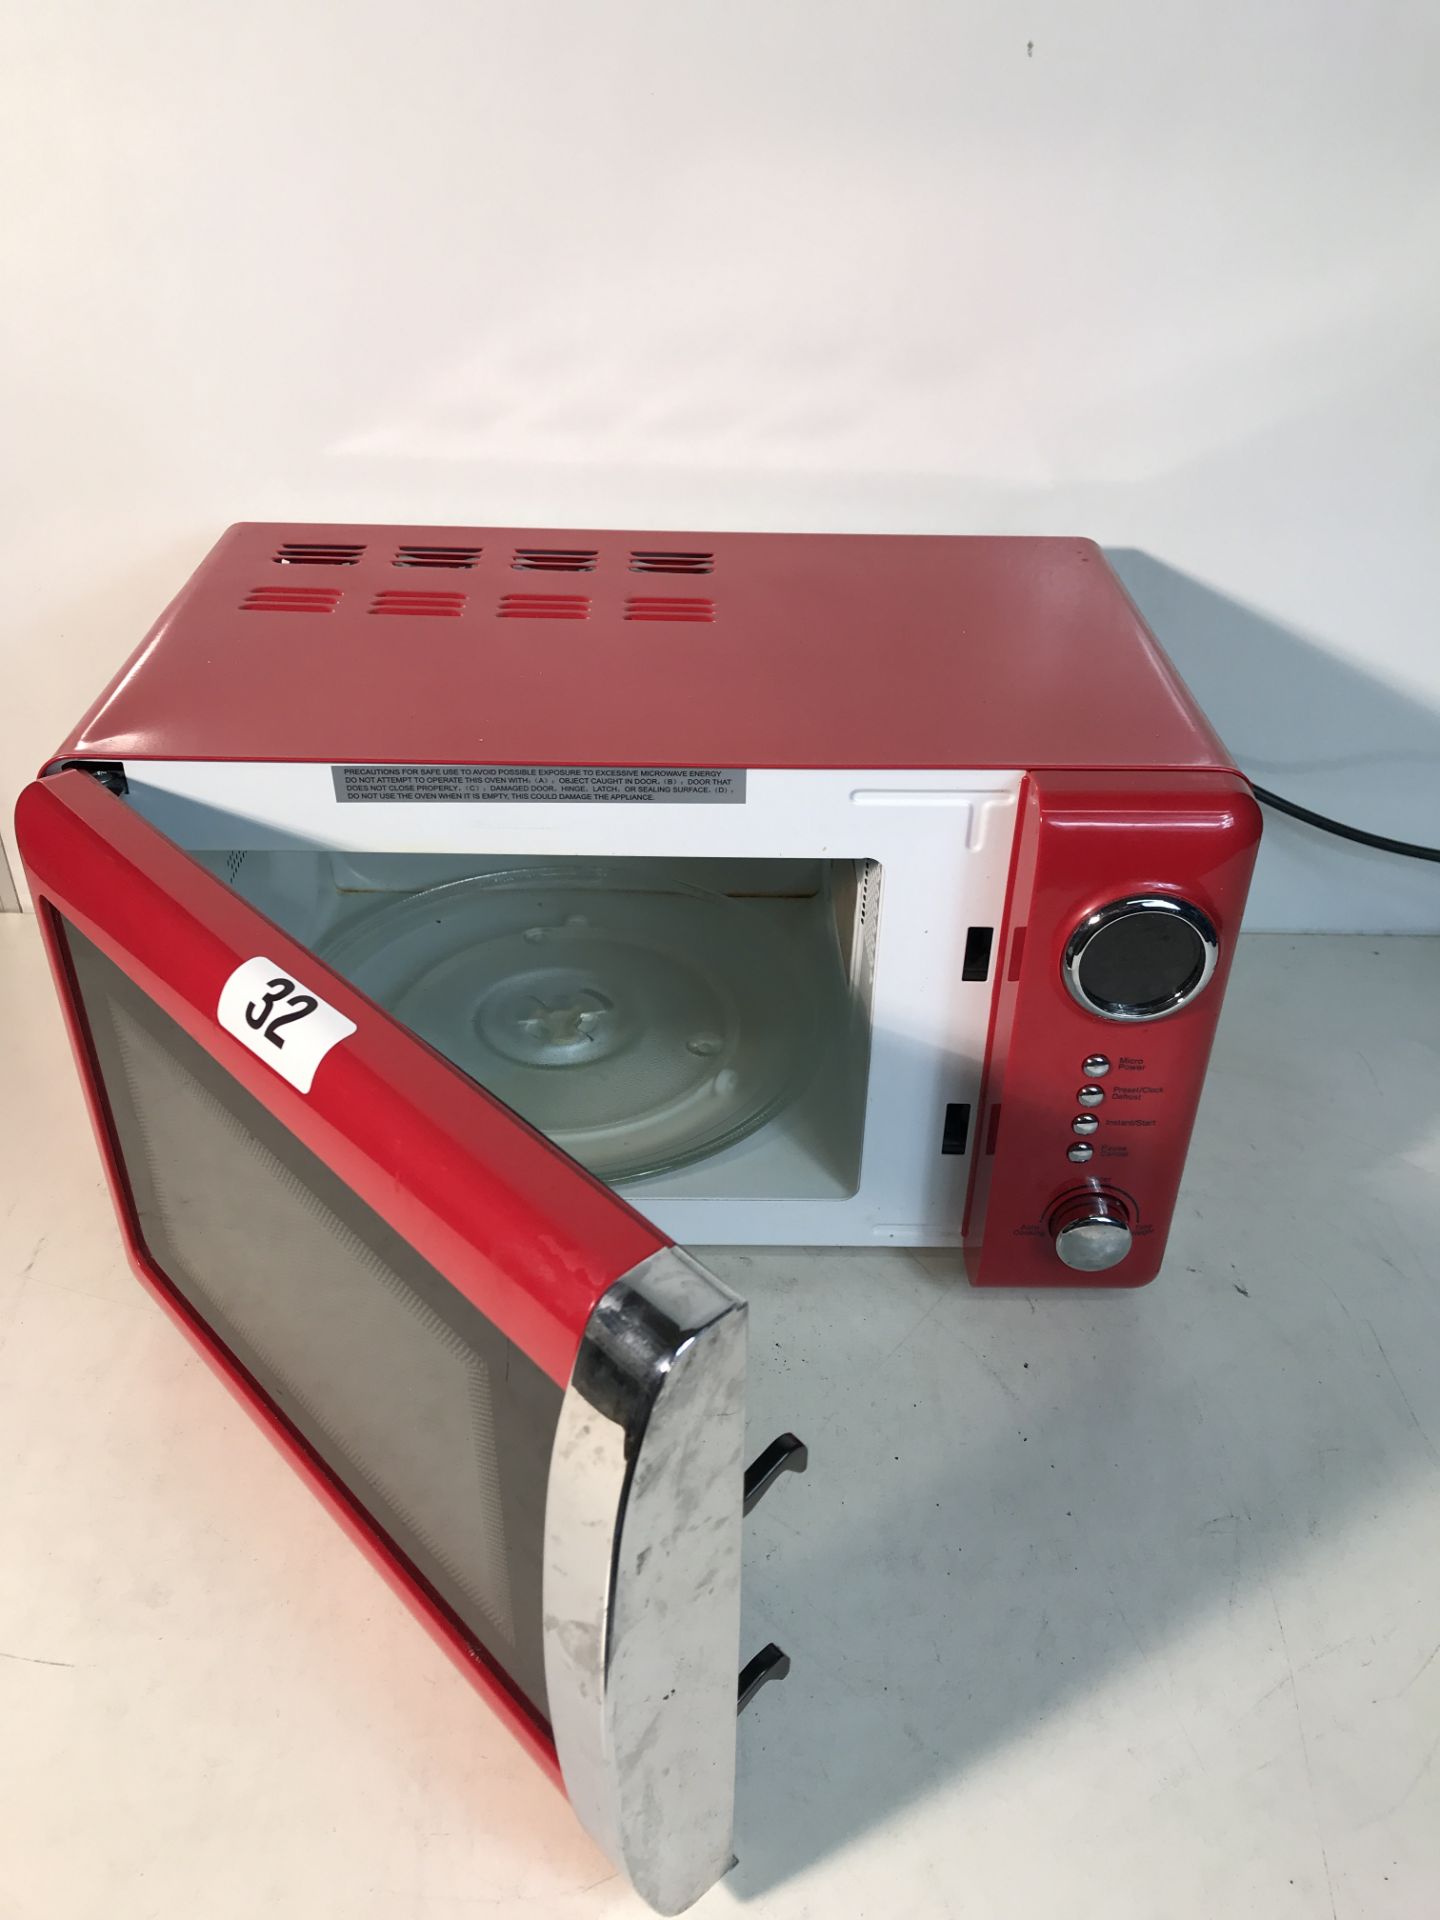 Wilko 20L Microwave Oven - Image 2 of 4